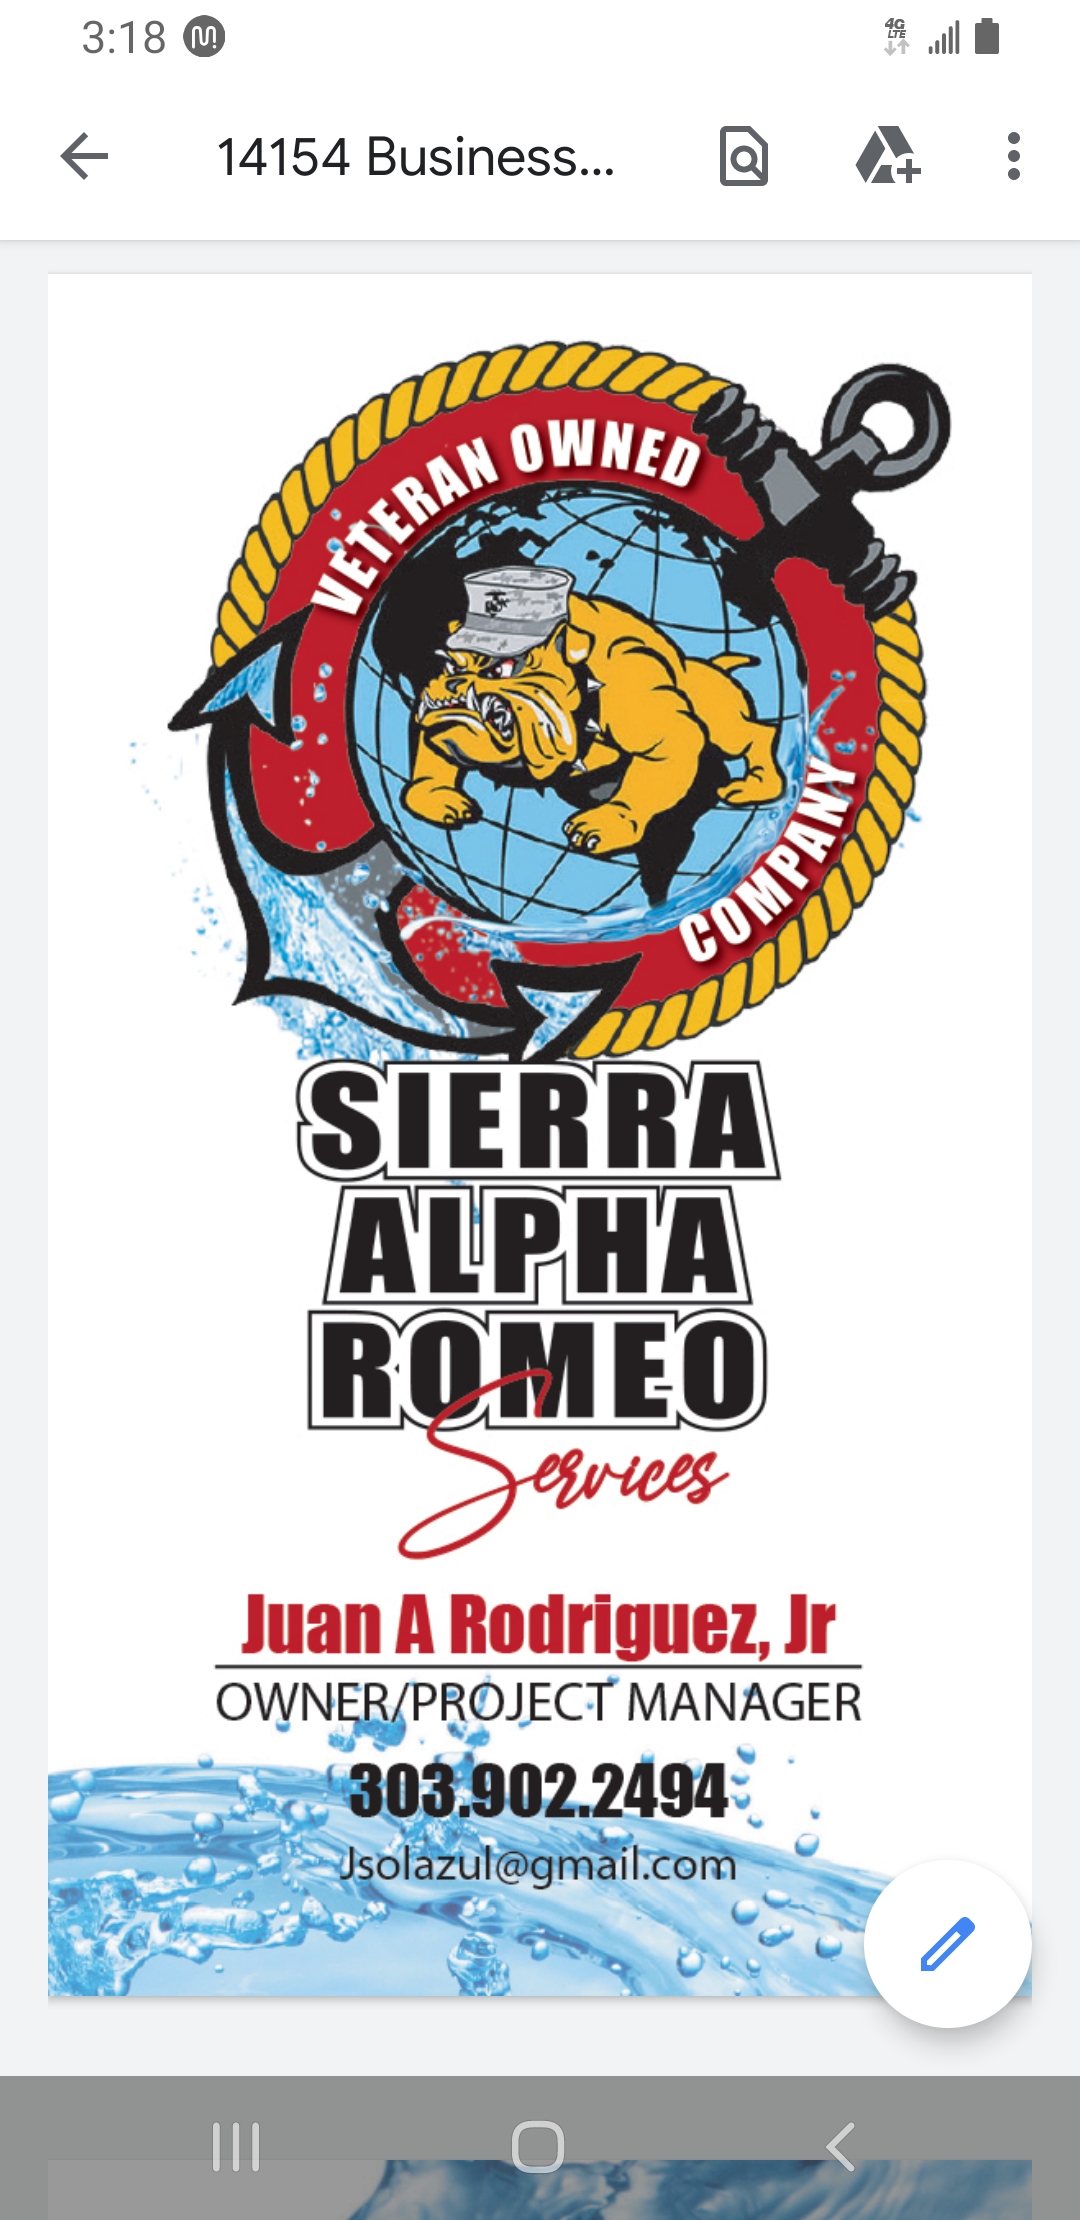 Sierra Alpha Romeo Services Logo